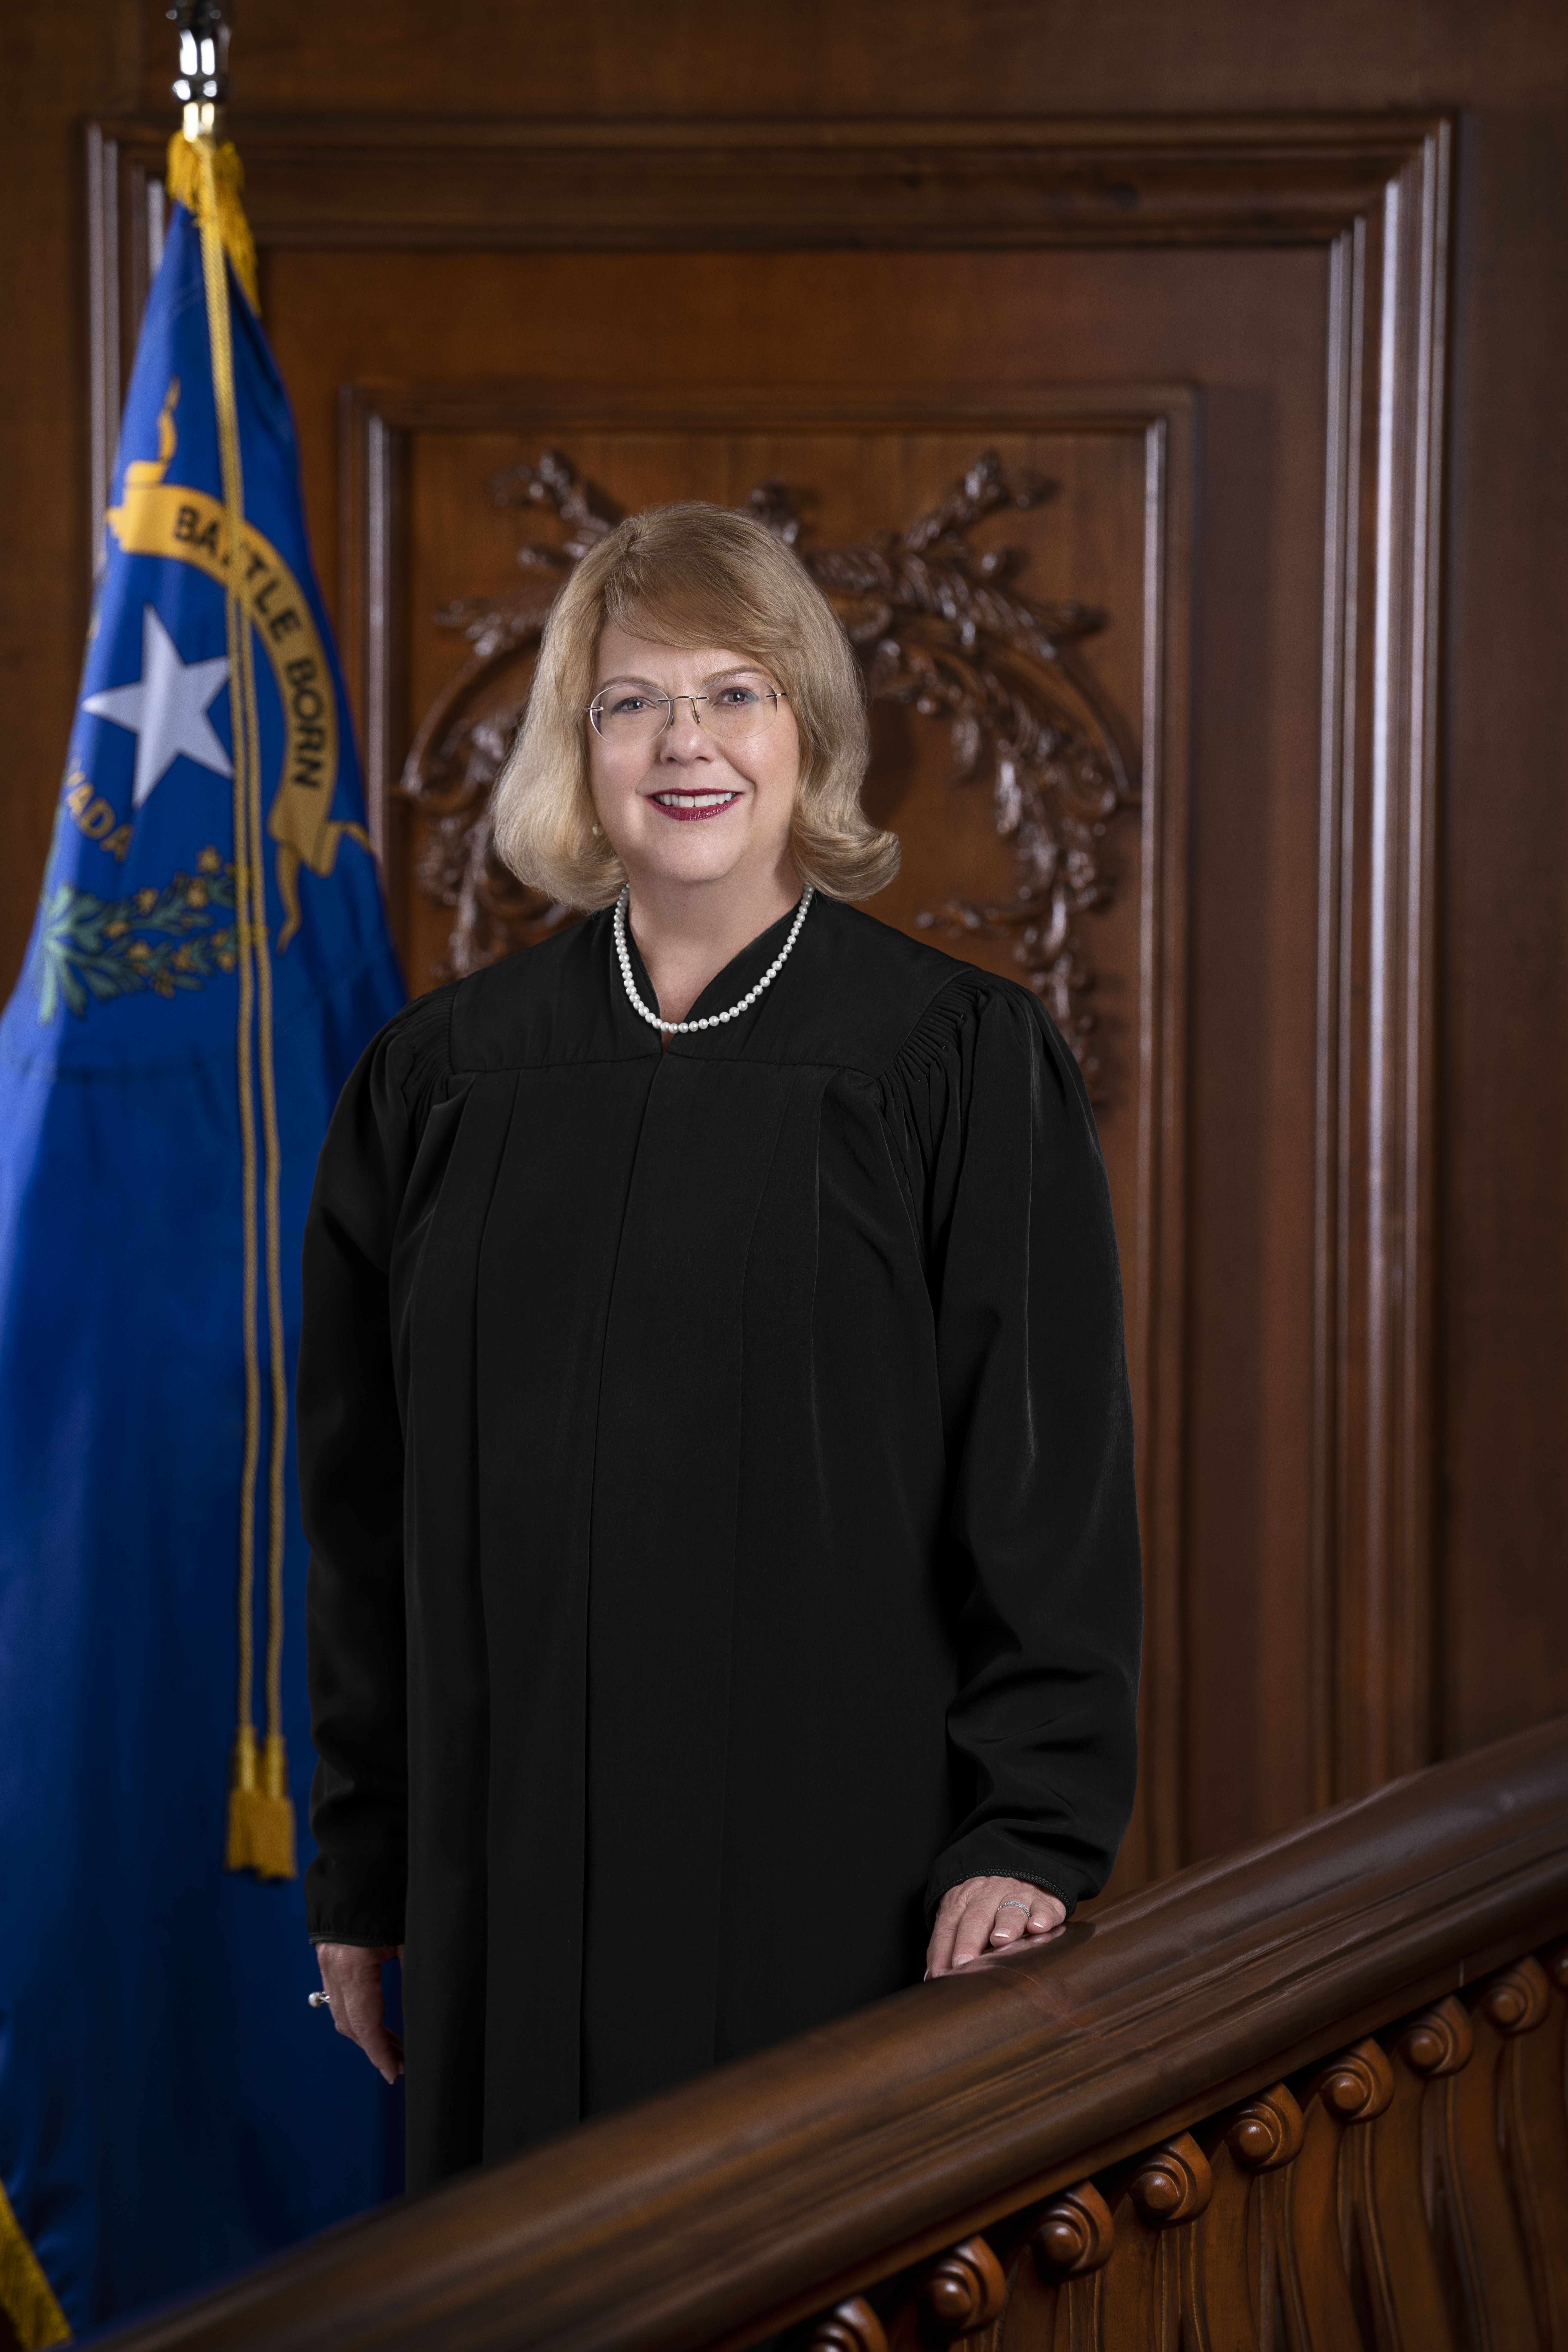 Judge Bonnie A. Bulla